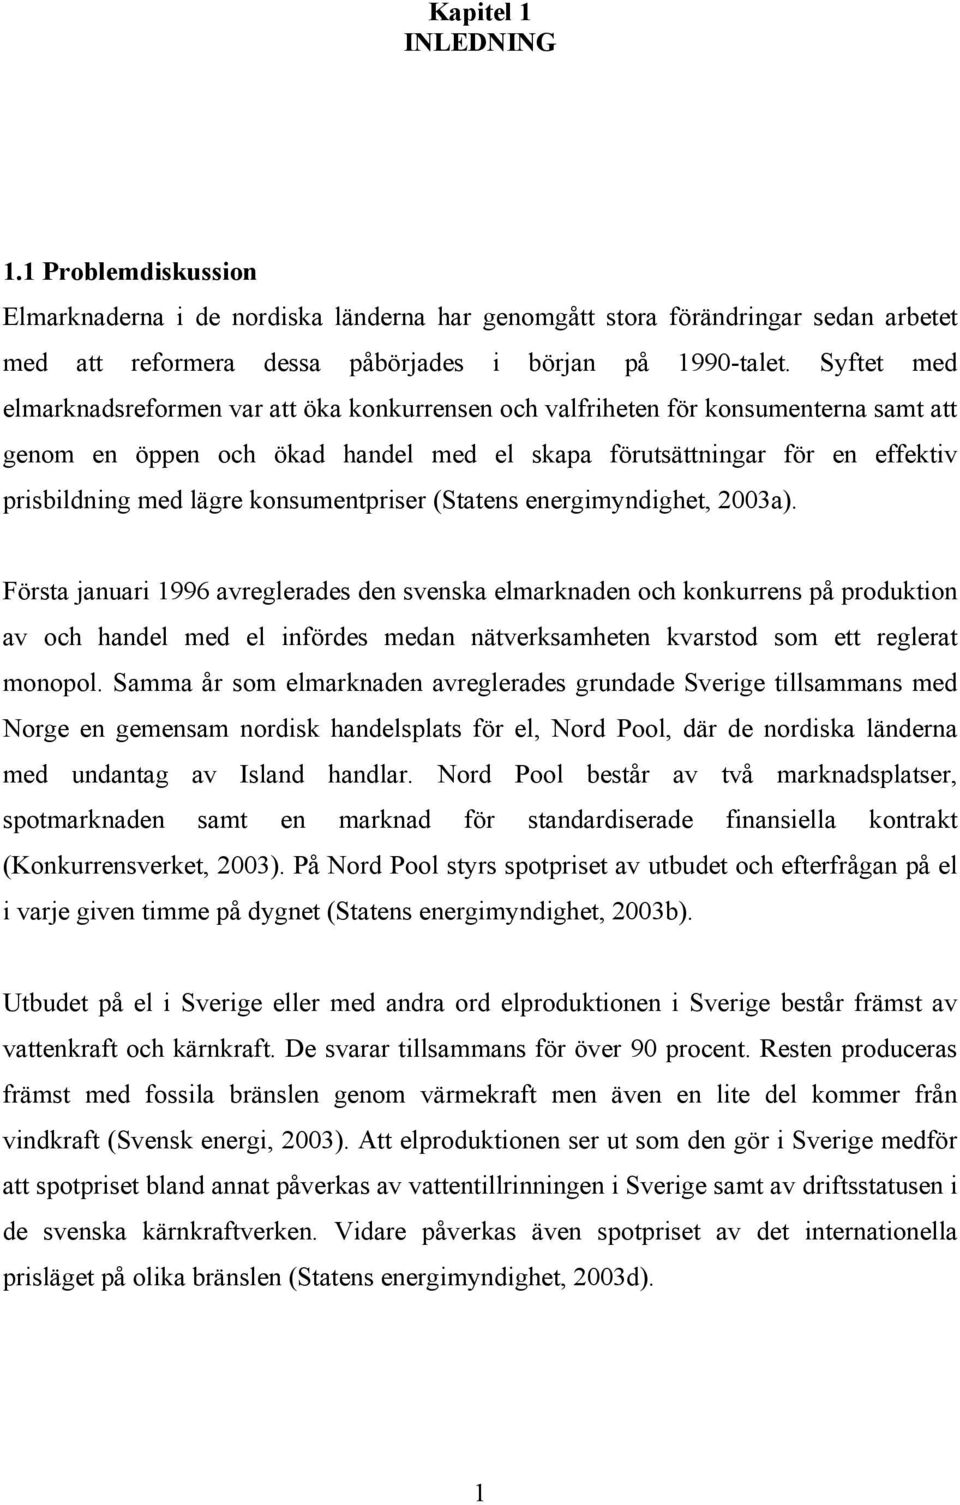 konsumentpriser (Statens energimyndighet, 2003a).